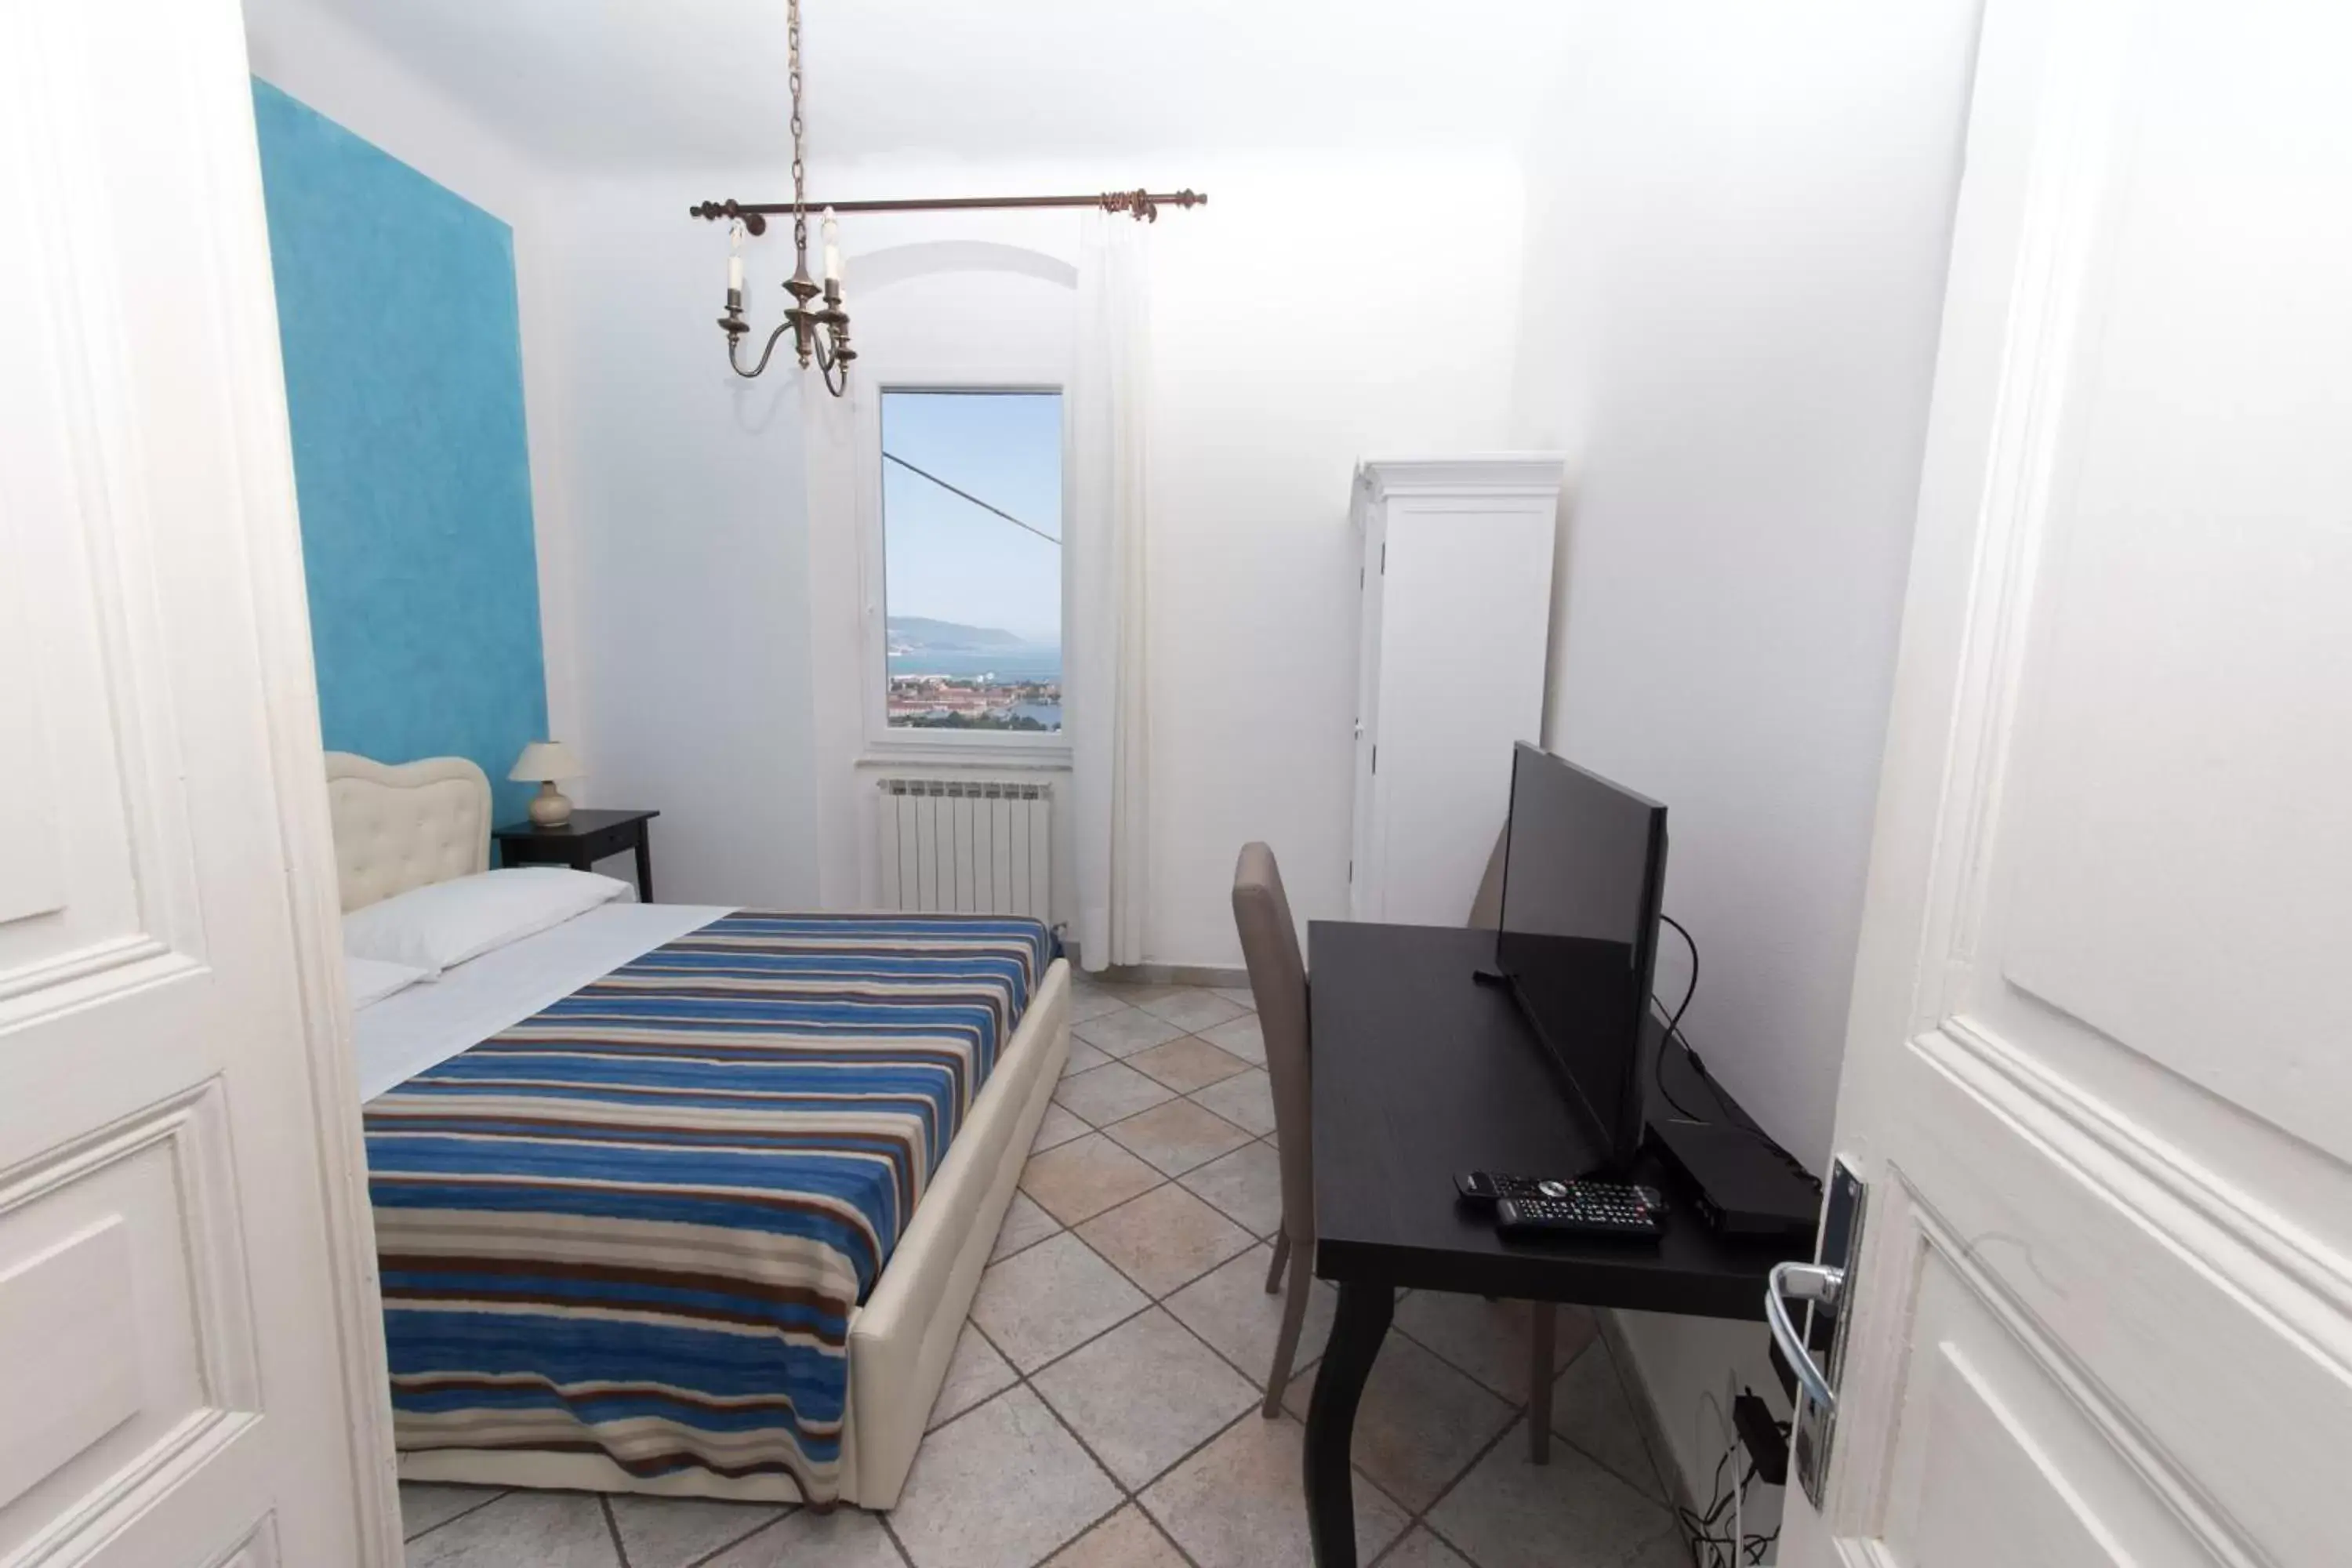 Bedroom, Room Photo in 88 Miglia